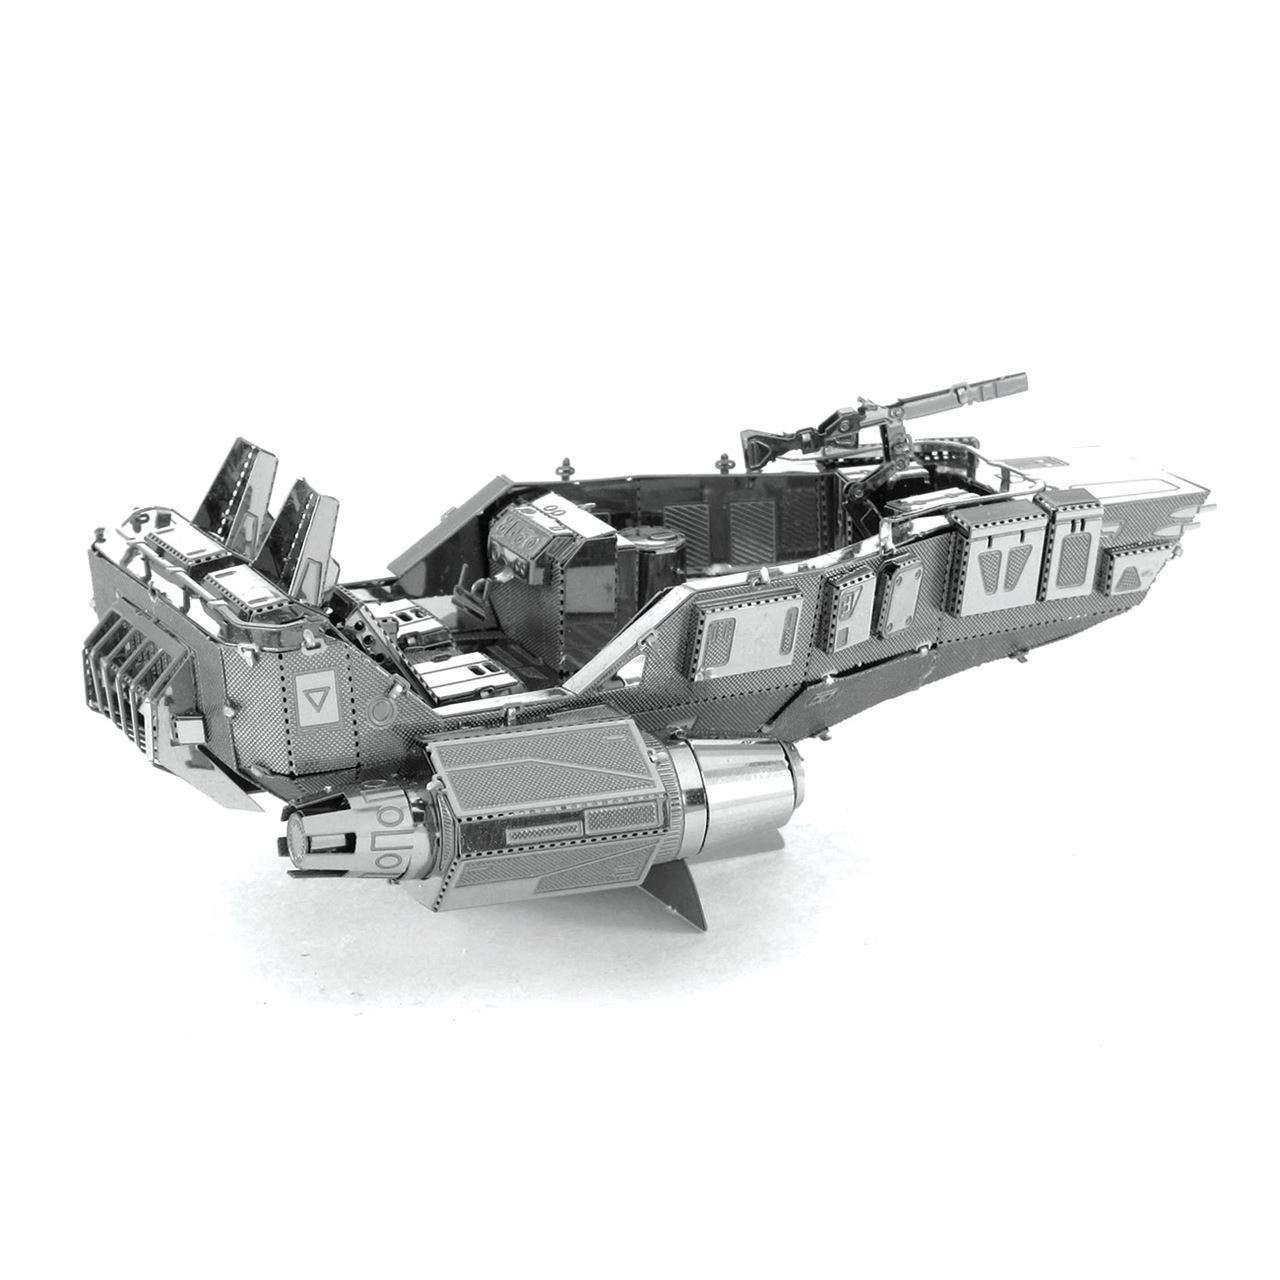 Star Wars First Order Snowspeeder 3D Puzzle Metall Modell Laser Cut Bausatz 